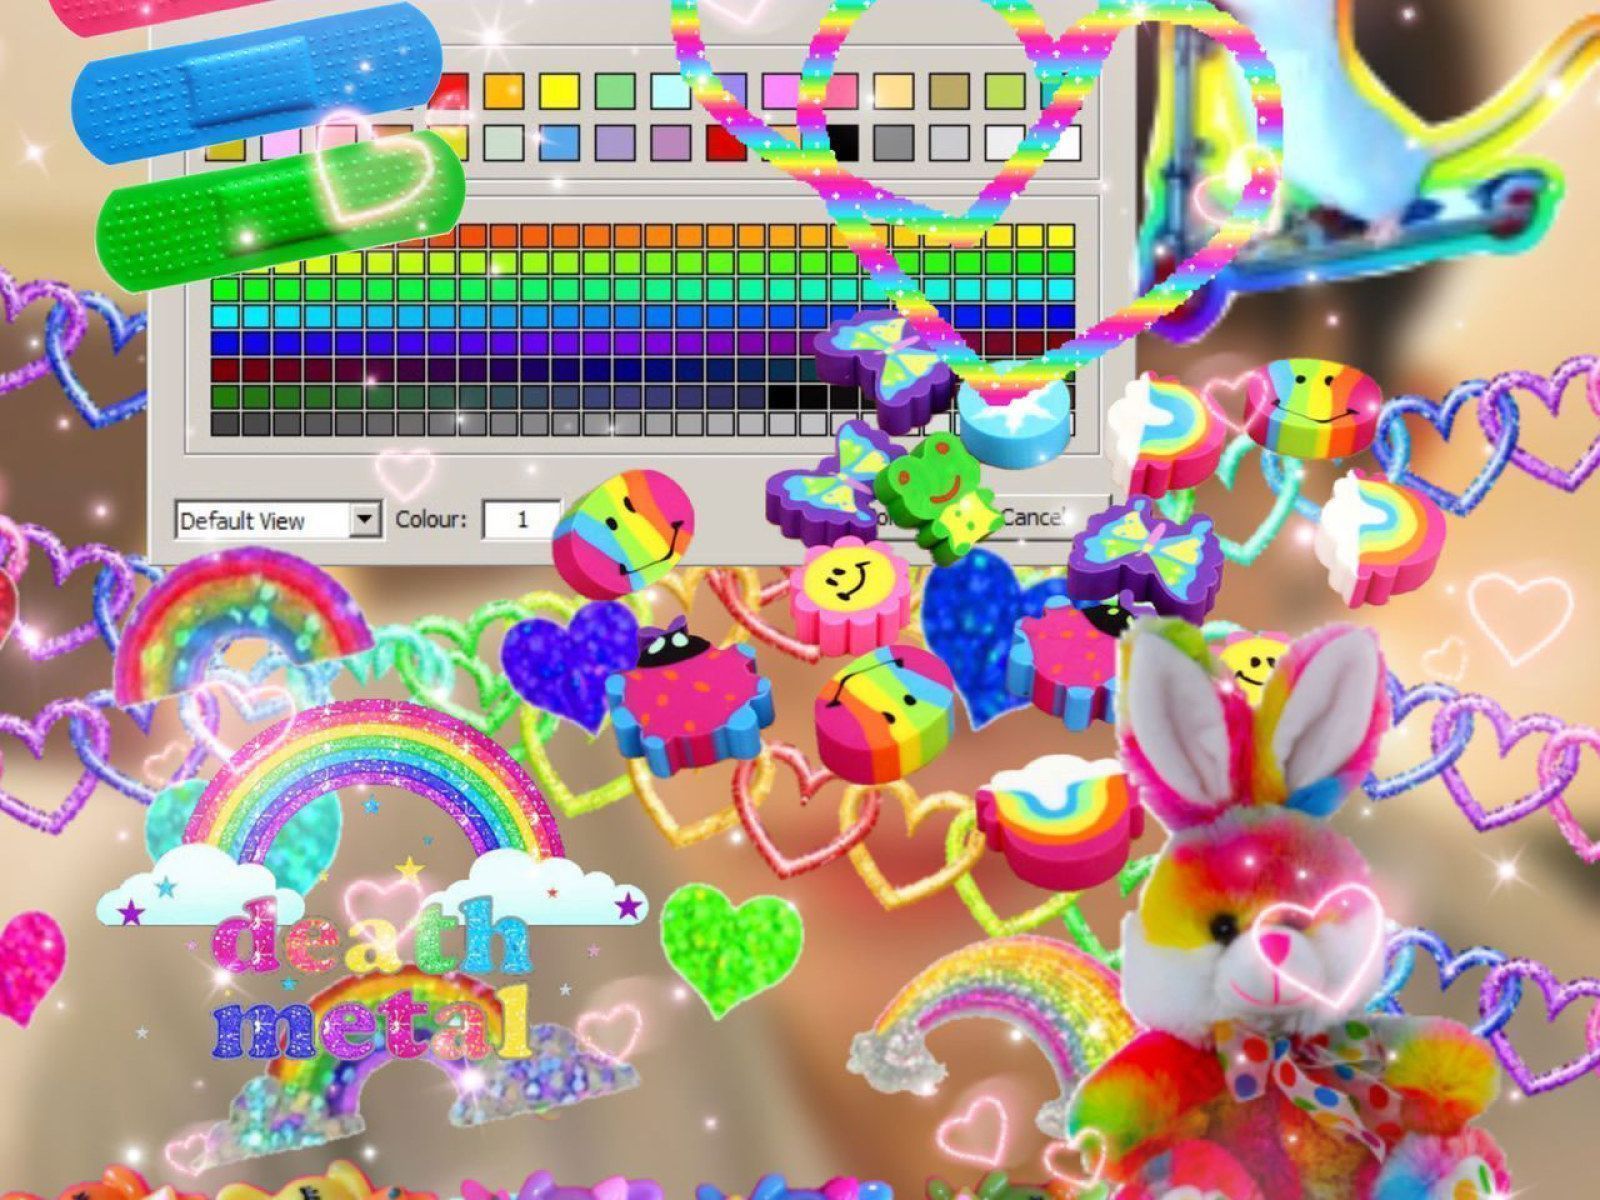 A rainbow background with a rainbow desktop icon - Kidcore, glitchcore